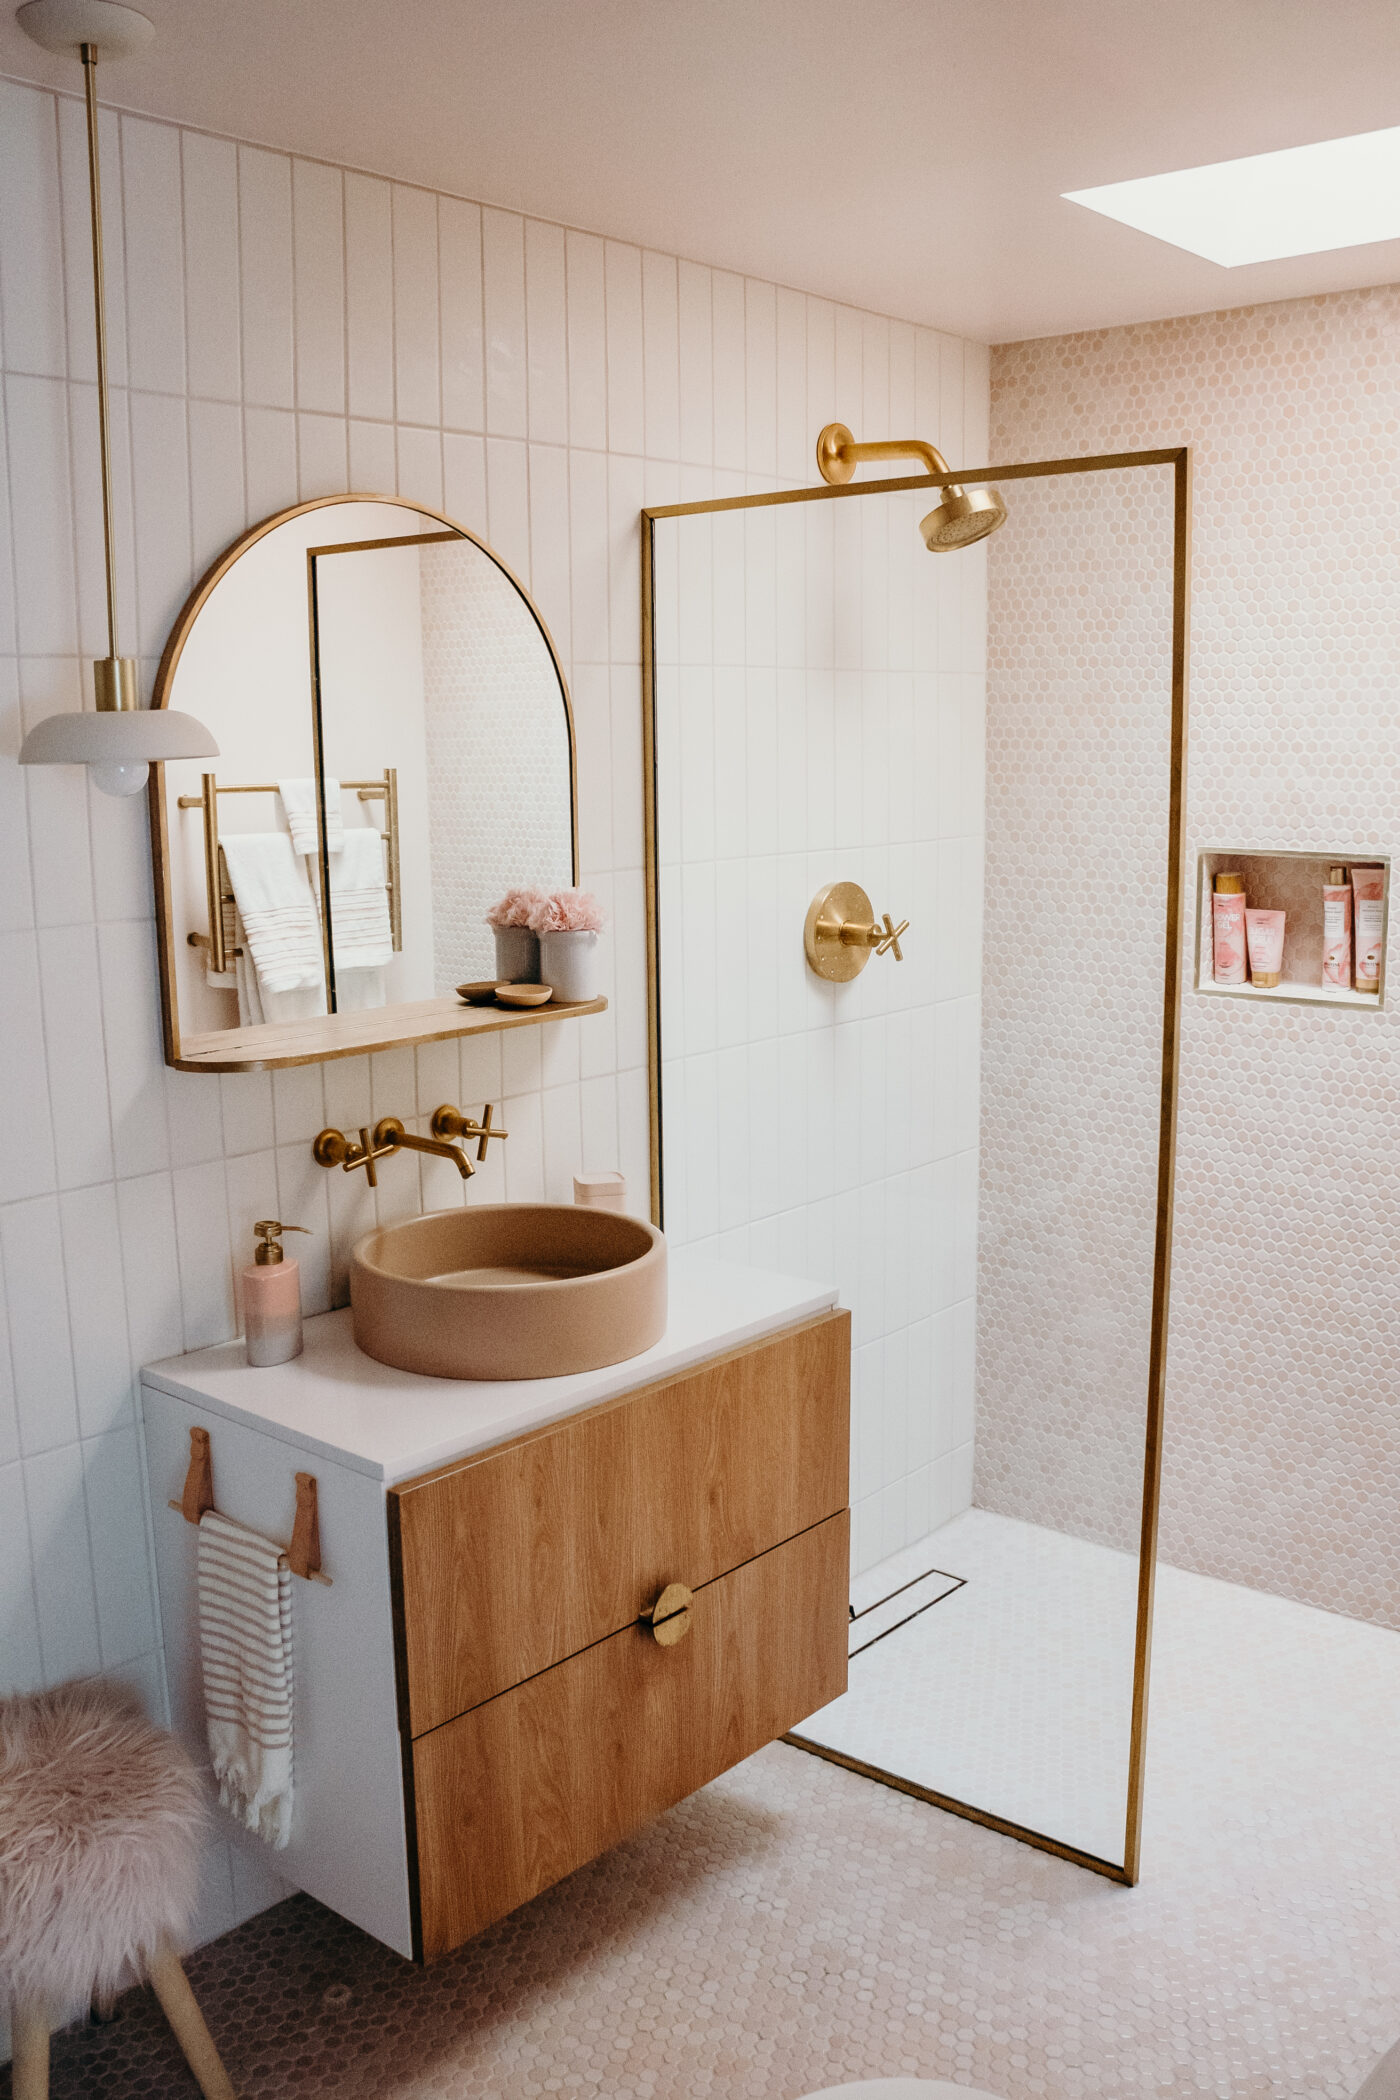 Design Ideas For Ikea Bathroom Vanity